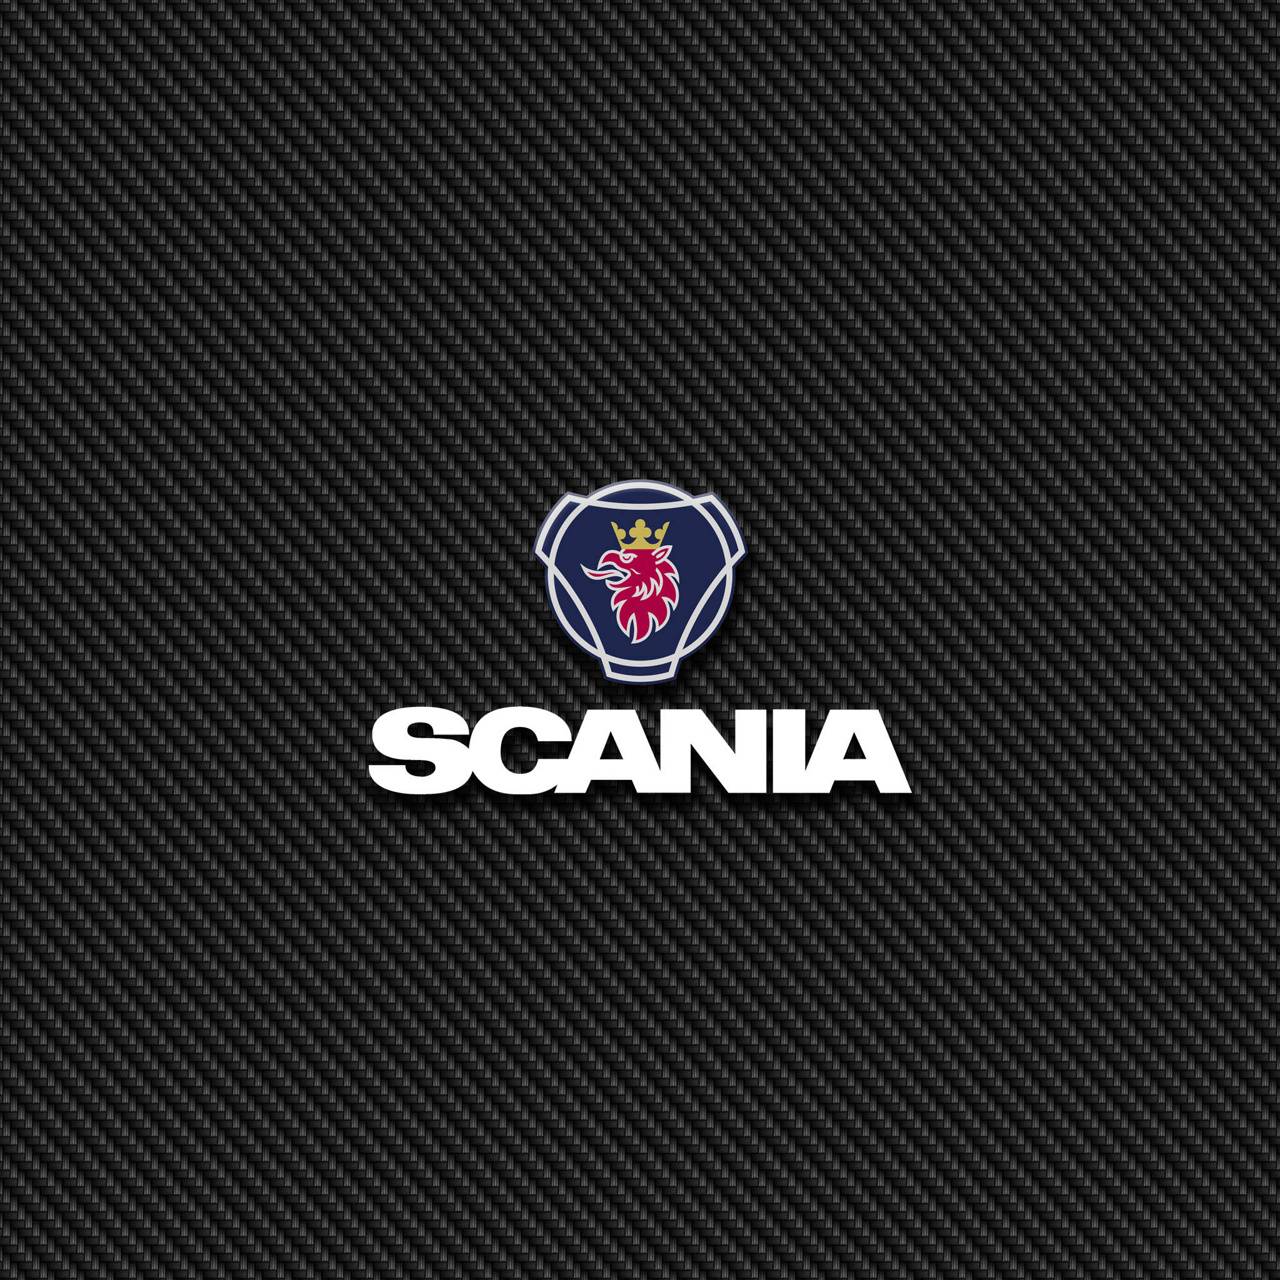 Scania Carbon 2 wallpaper